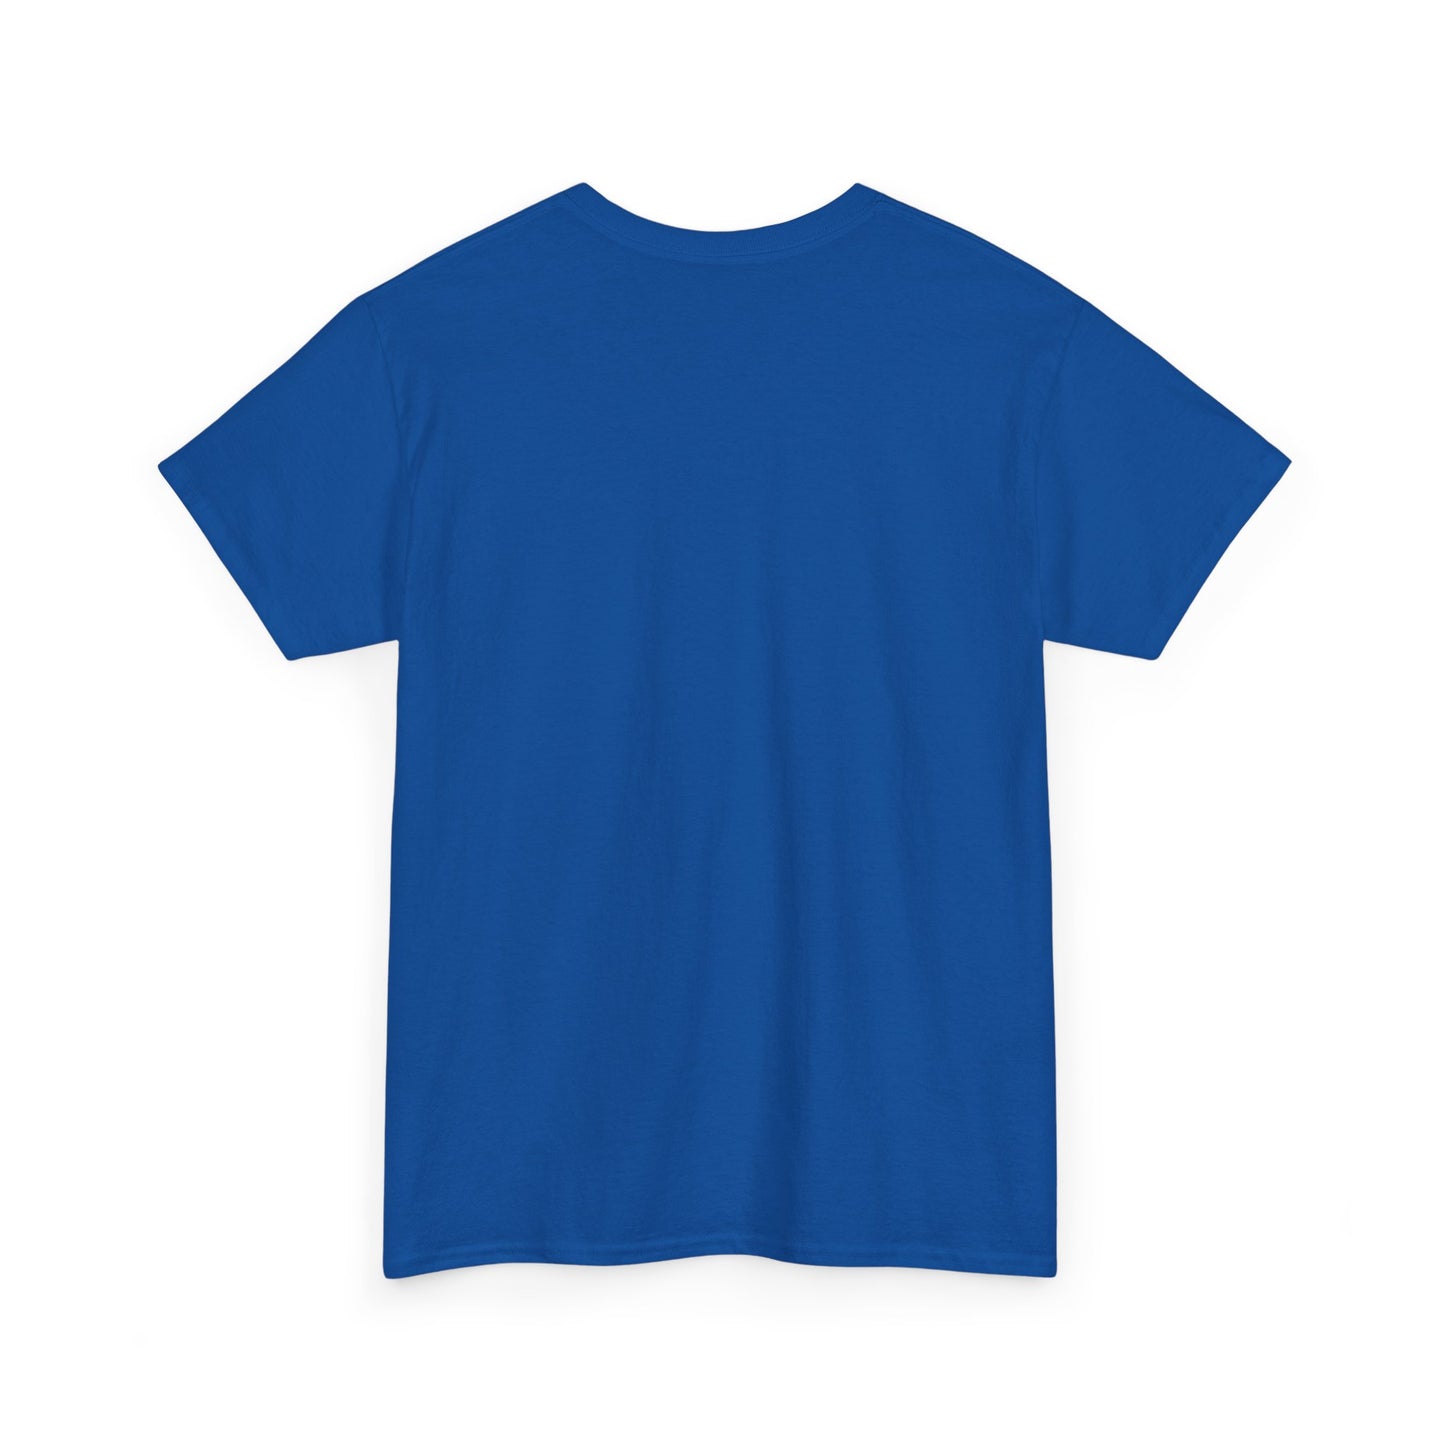 Unisex Heavy Cotton Graphic design (Angel) T-shirt